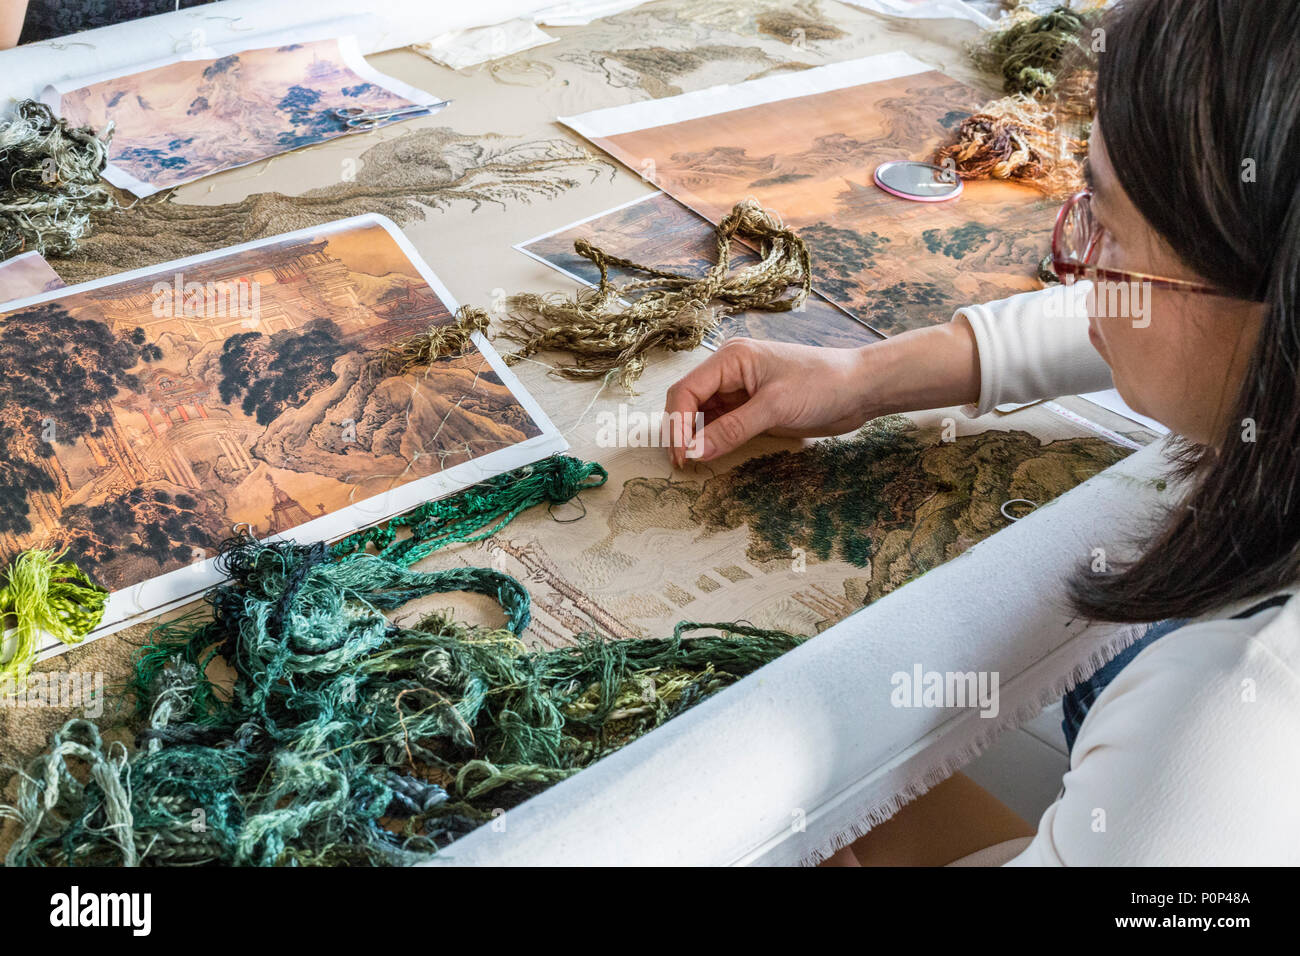 Suzhou, Jiangsu, China.  Young Woman Working on a Piece of Embroidery Art. Stock Photo